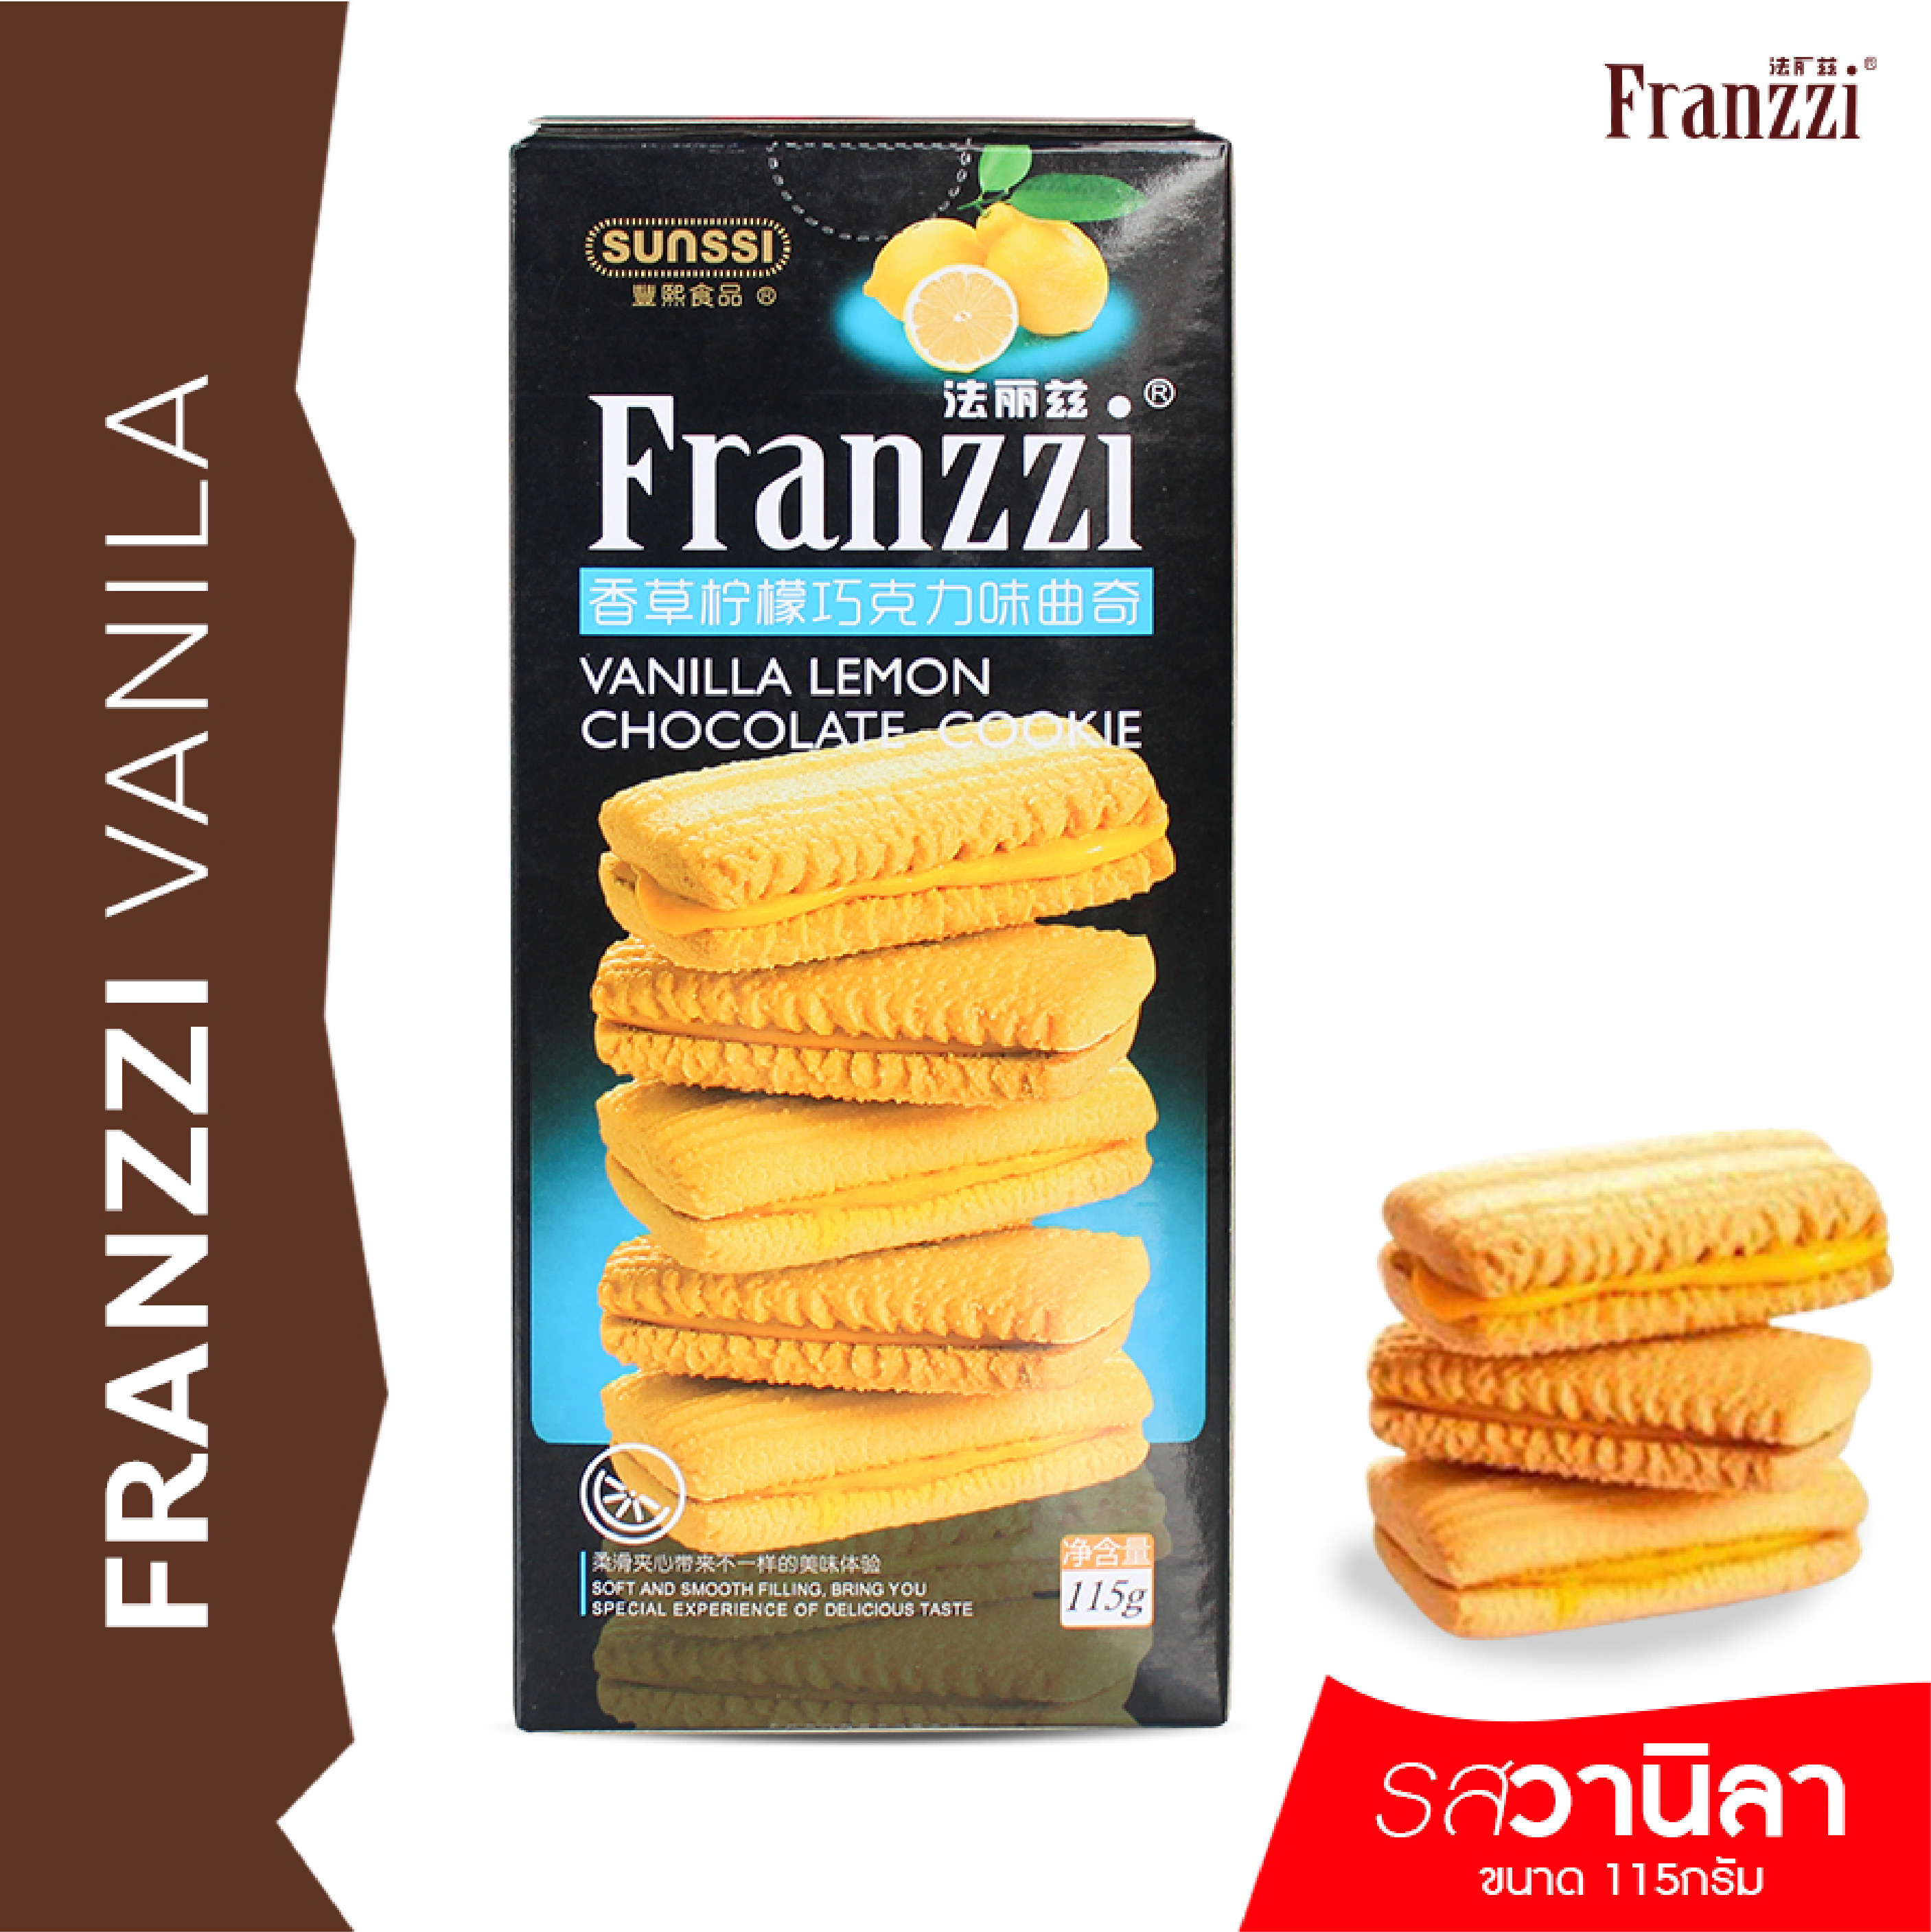 FRANZZI ขนาด 115 กรัม ไฉไล อินเตอร์เทรด บริษัทนำเข้าขนม